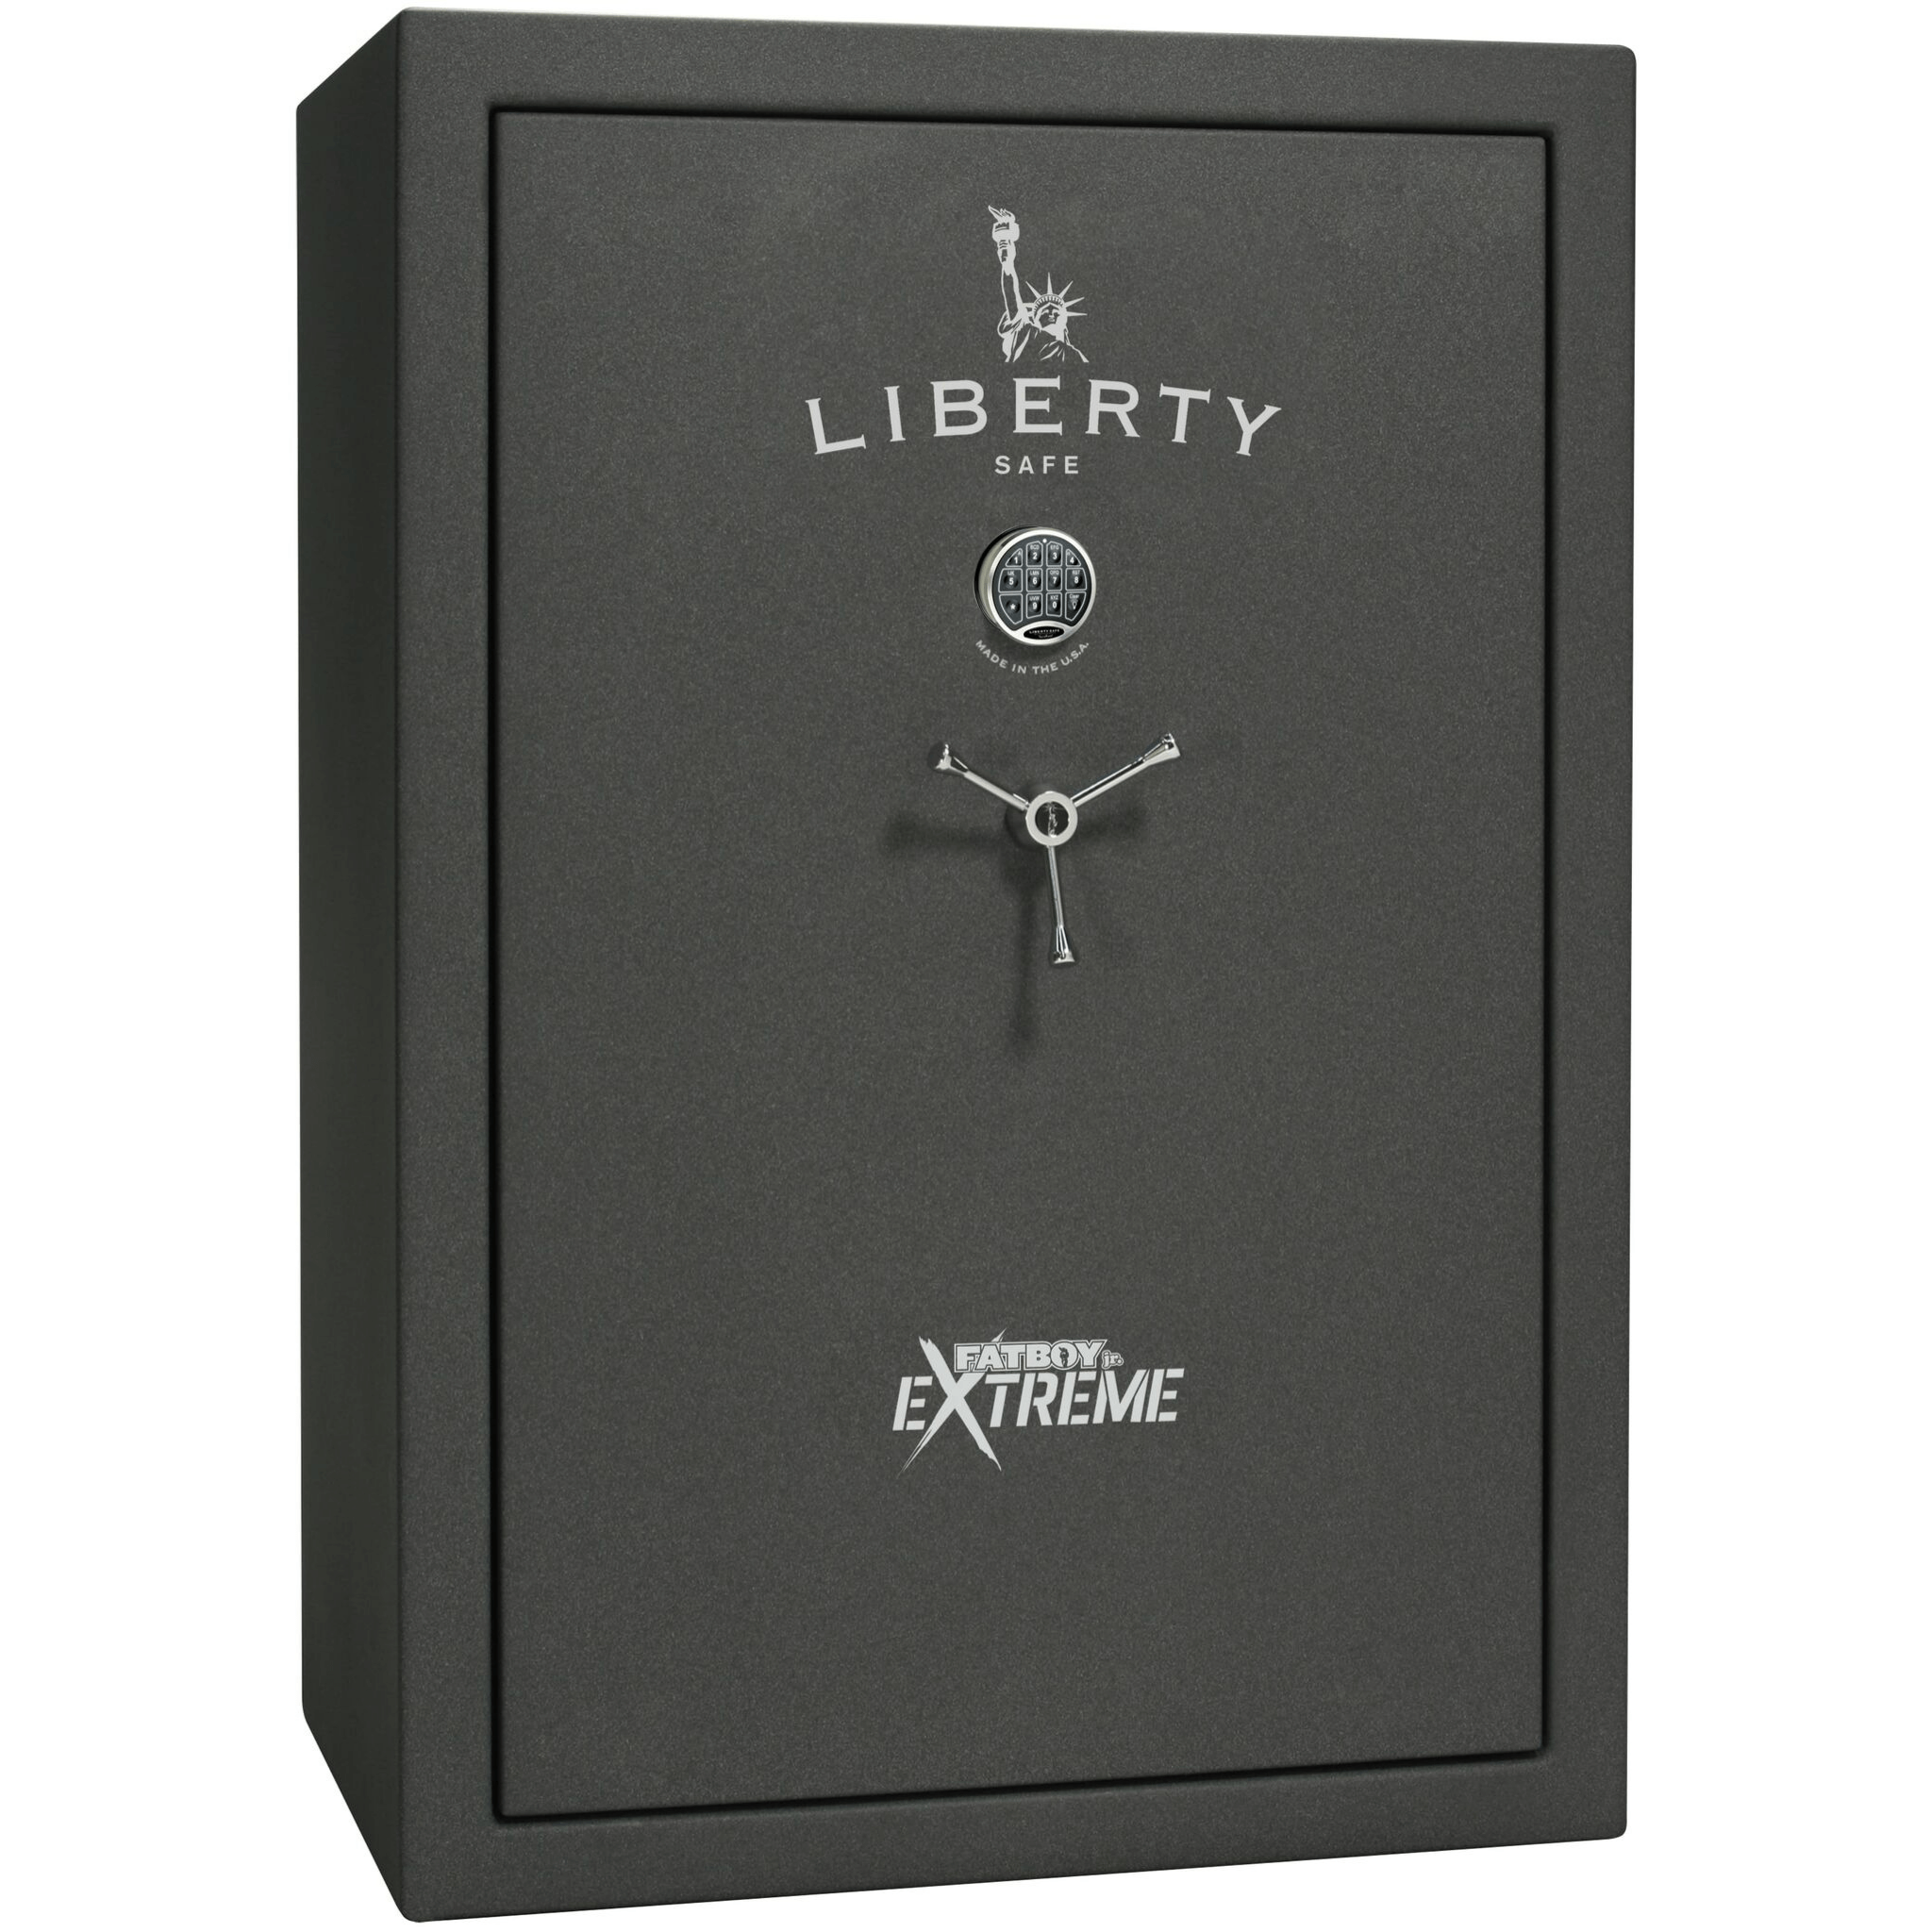 Liberty Fatboy Jr 48 Extreme Gun Safe with Electronic Lock, photo 5